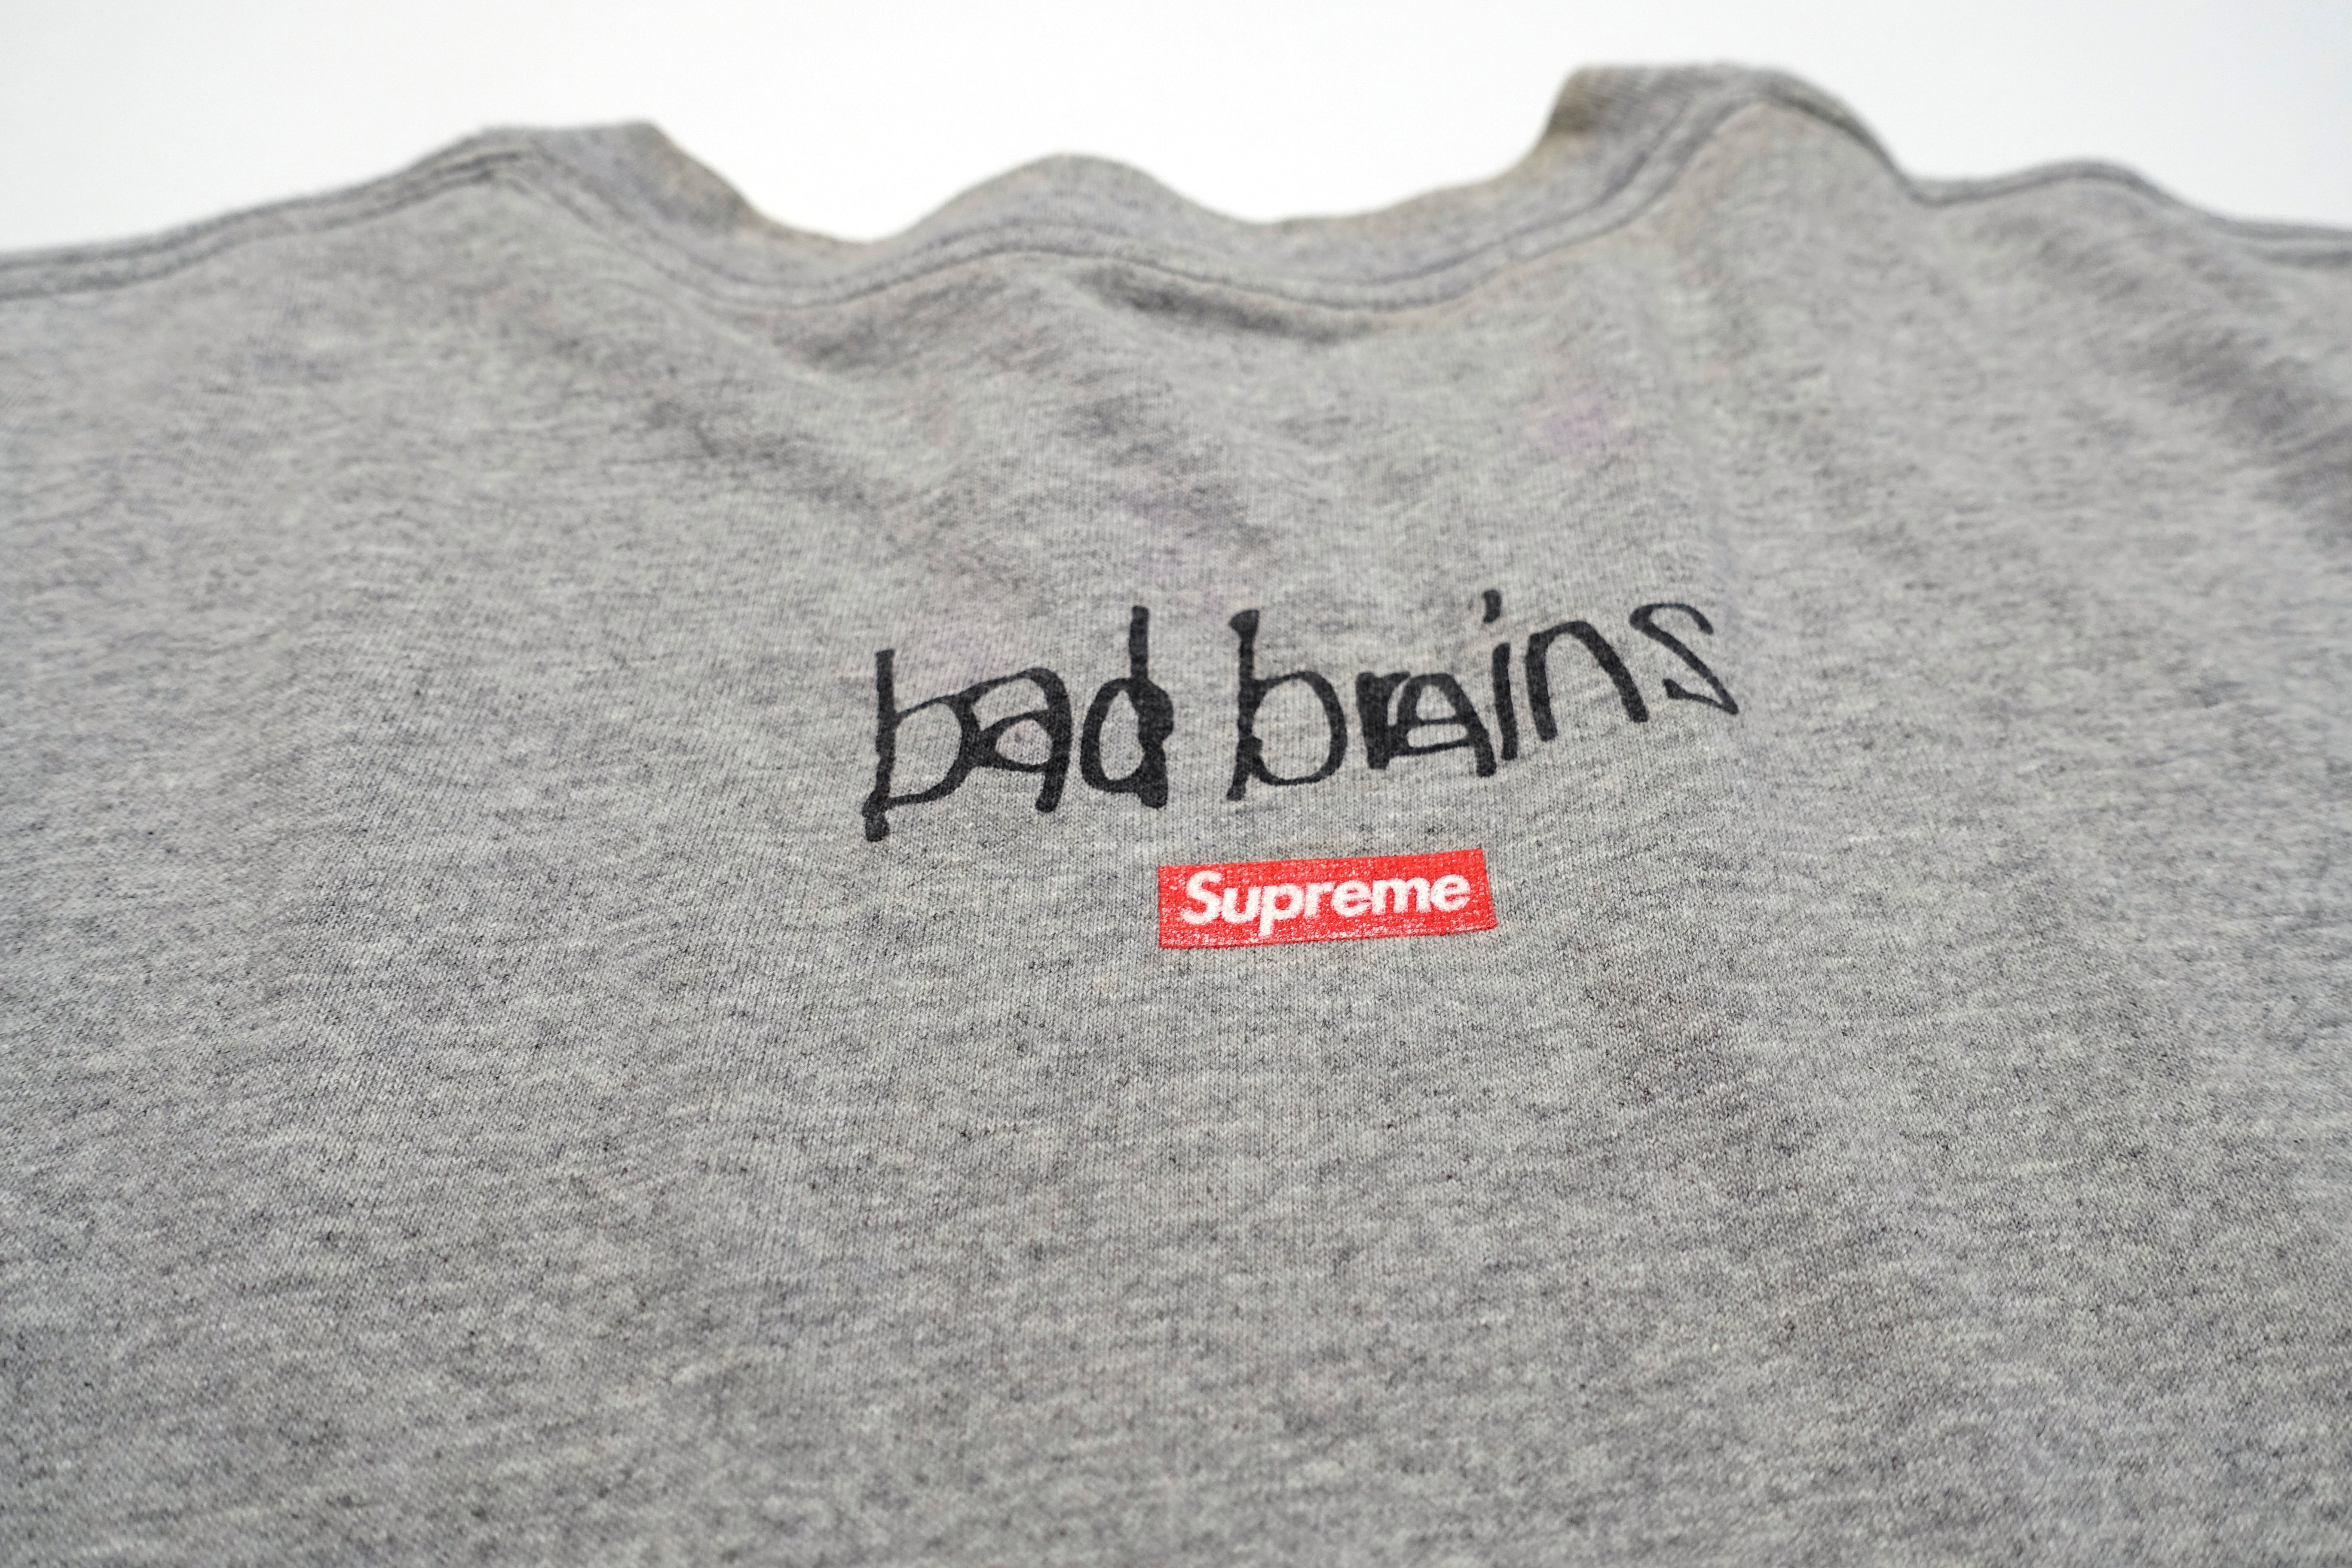 Bad Brains T-Shirt Dress